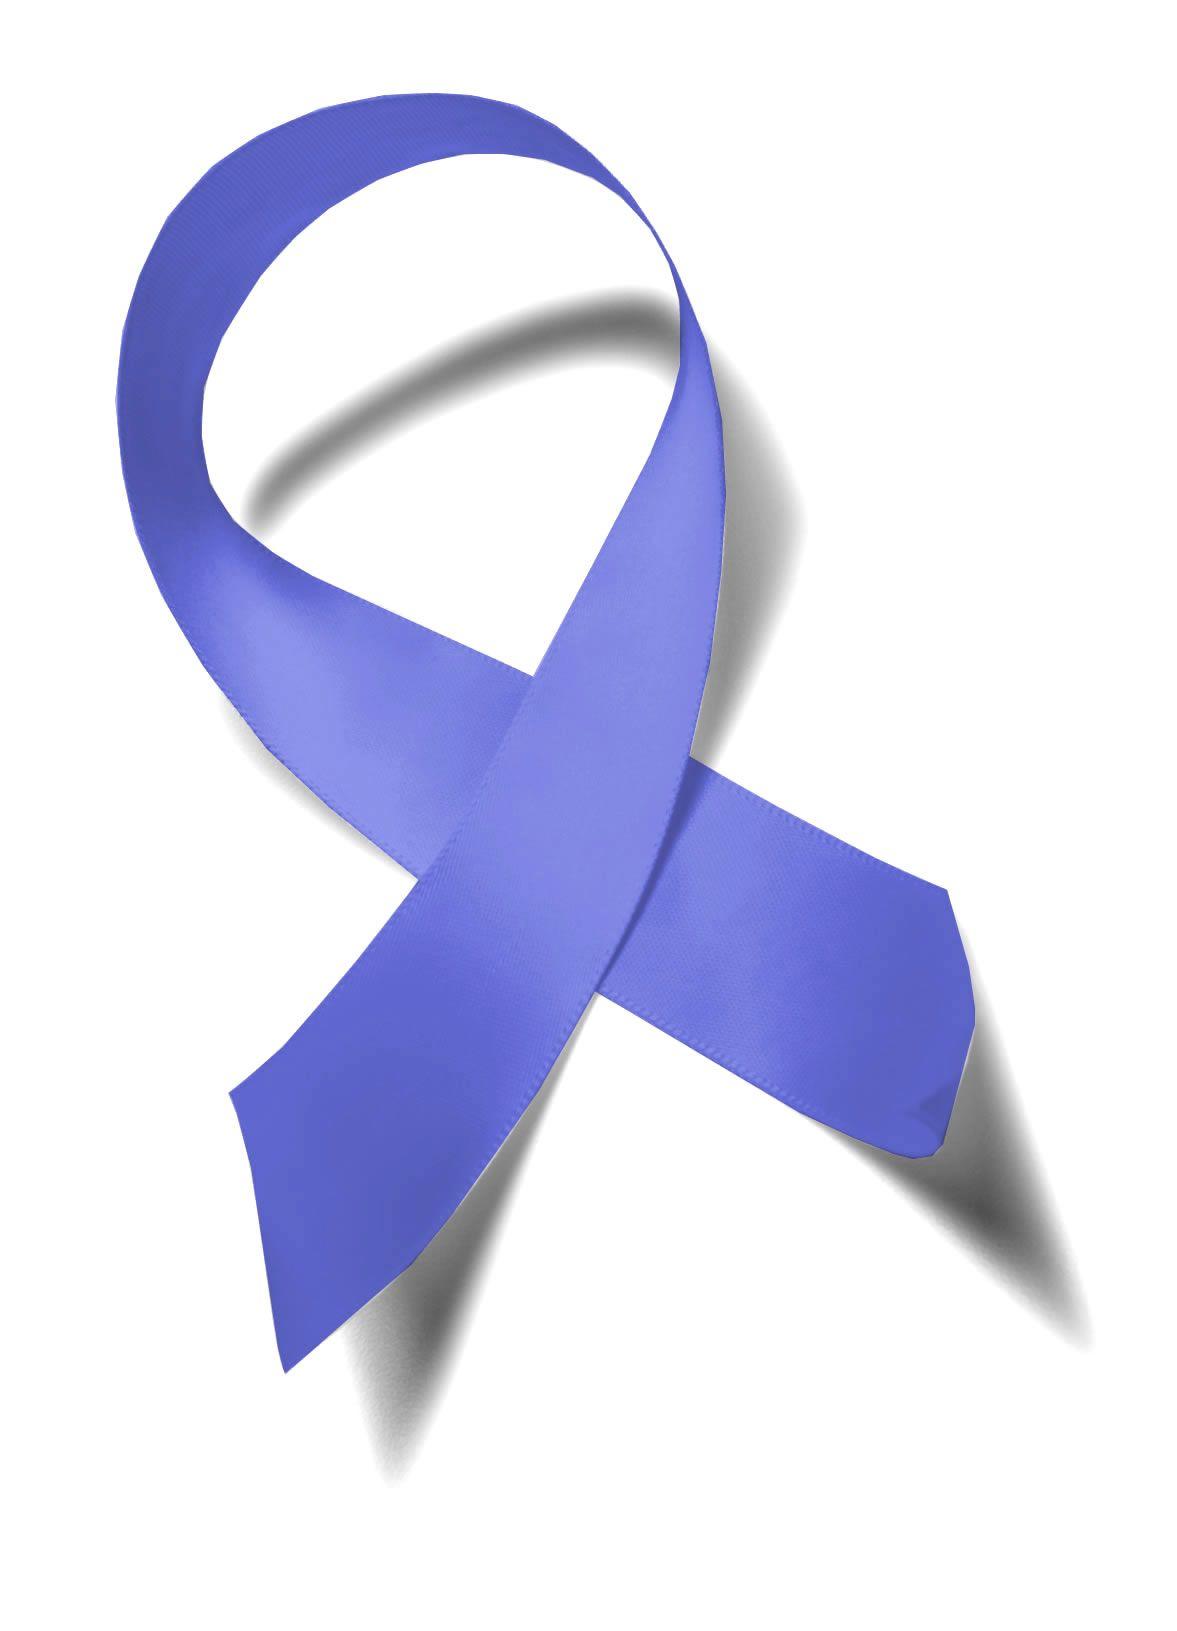 Free Prostate Cancer Ribbon Image, Download Free Clip Art, Free